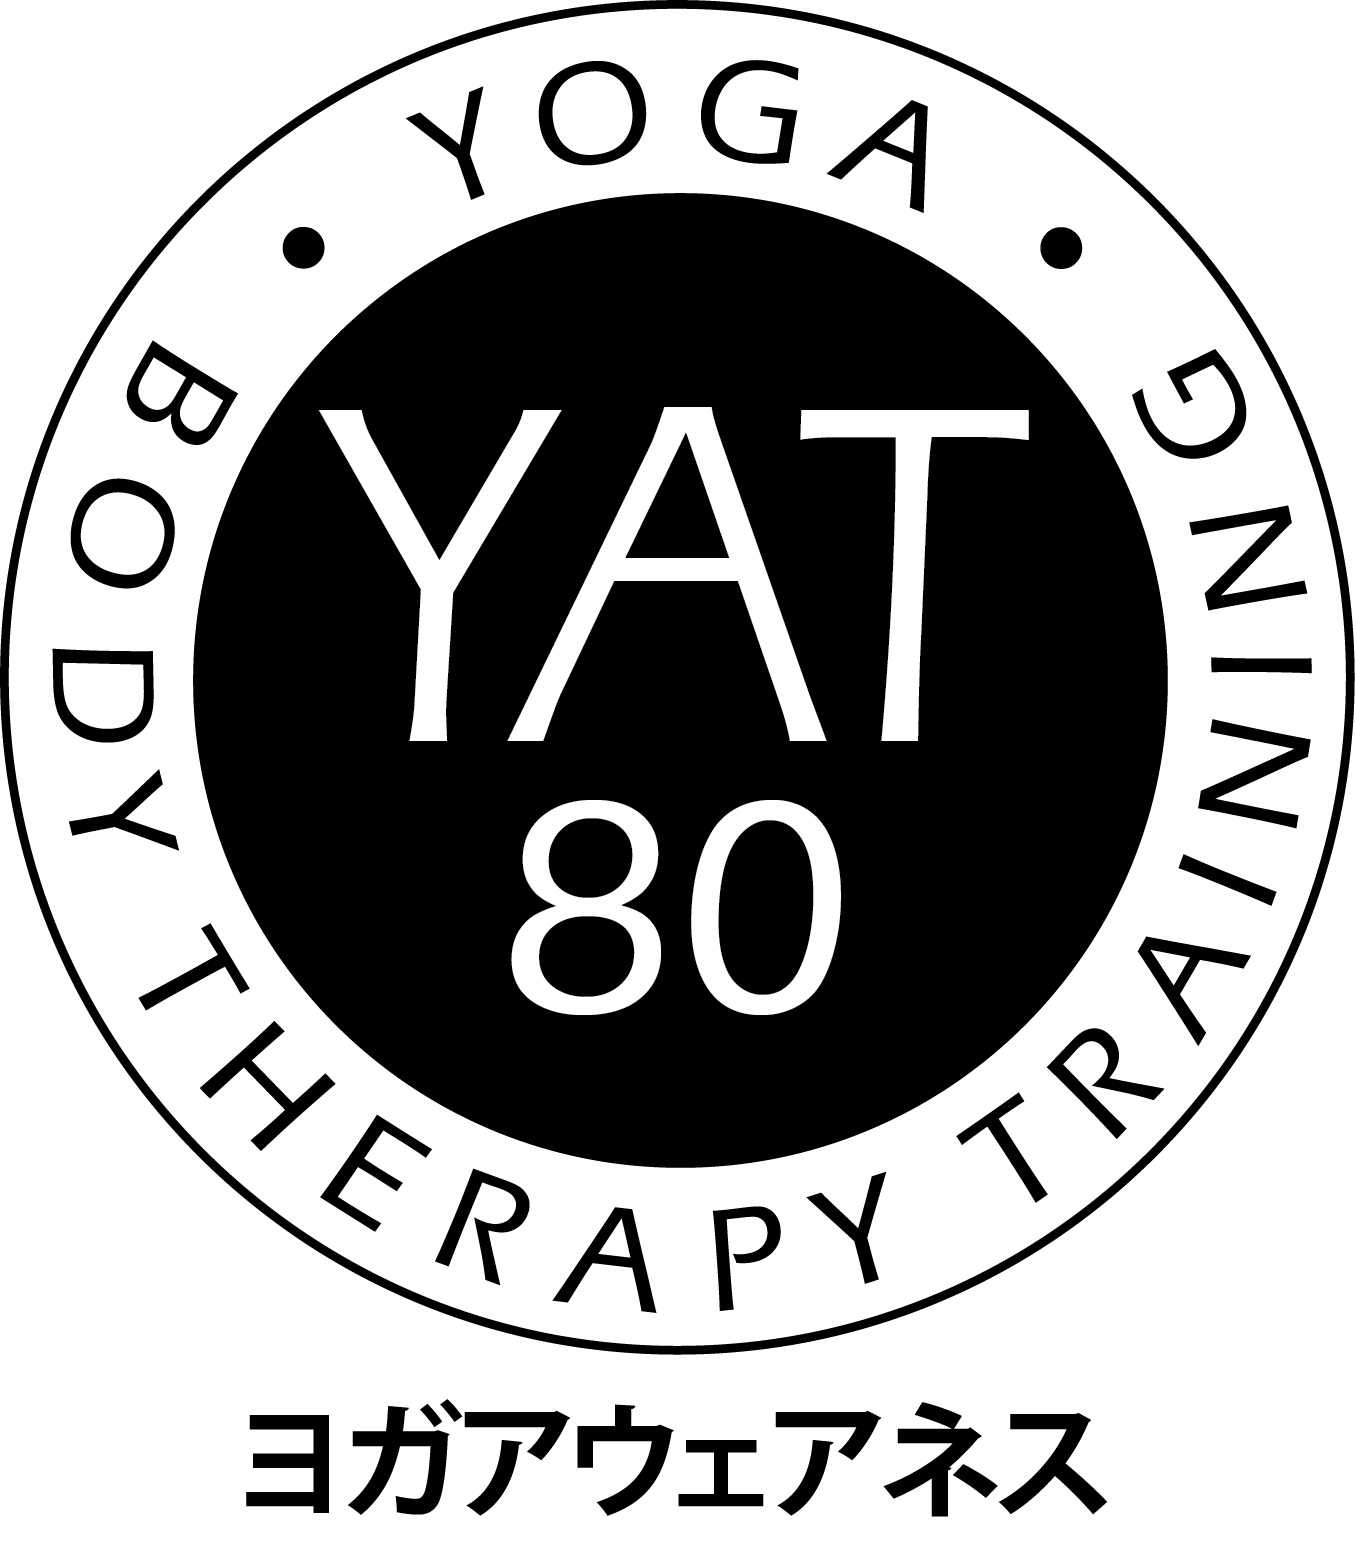 BODY YAT-80-ja